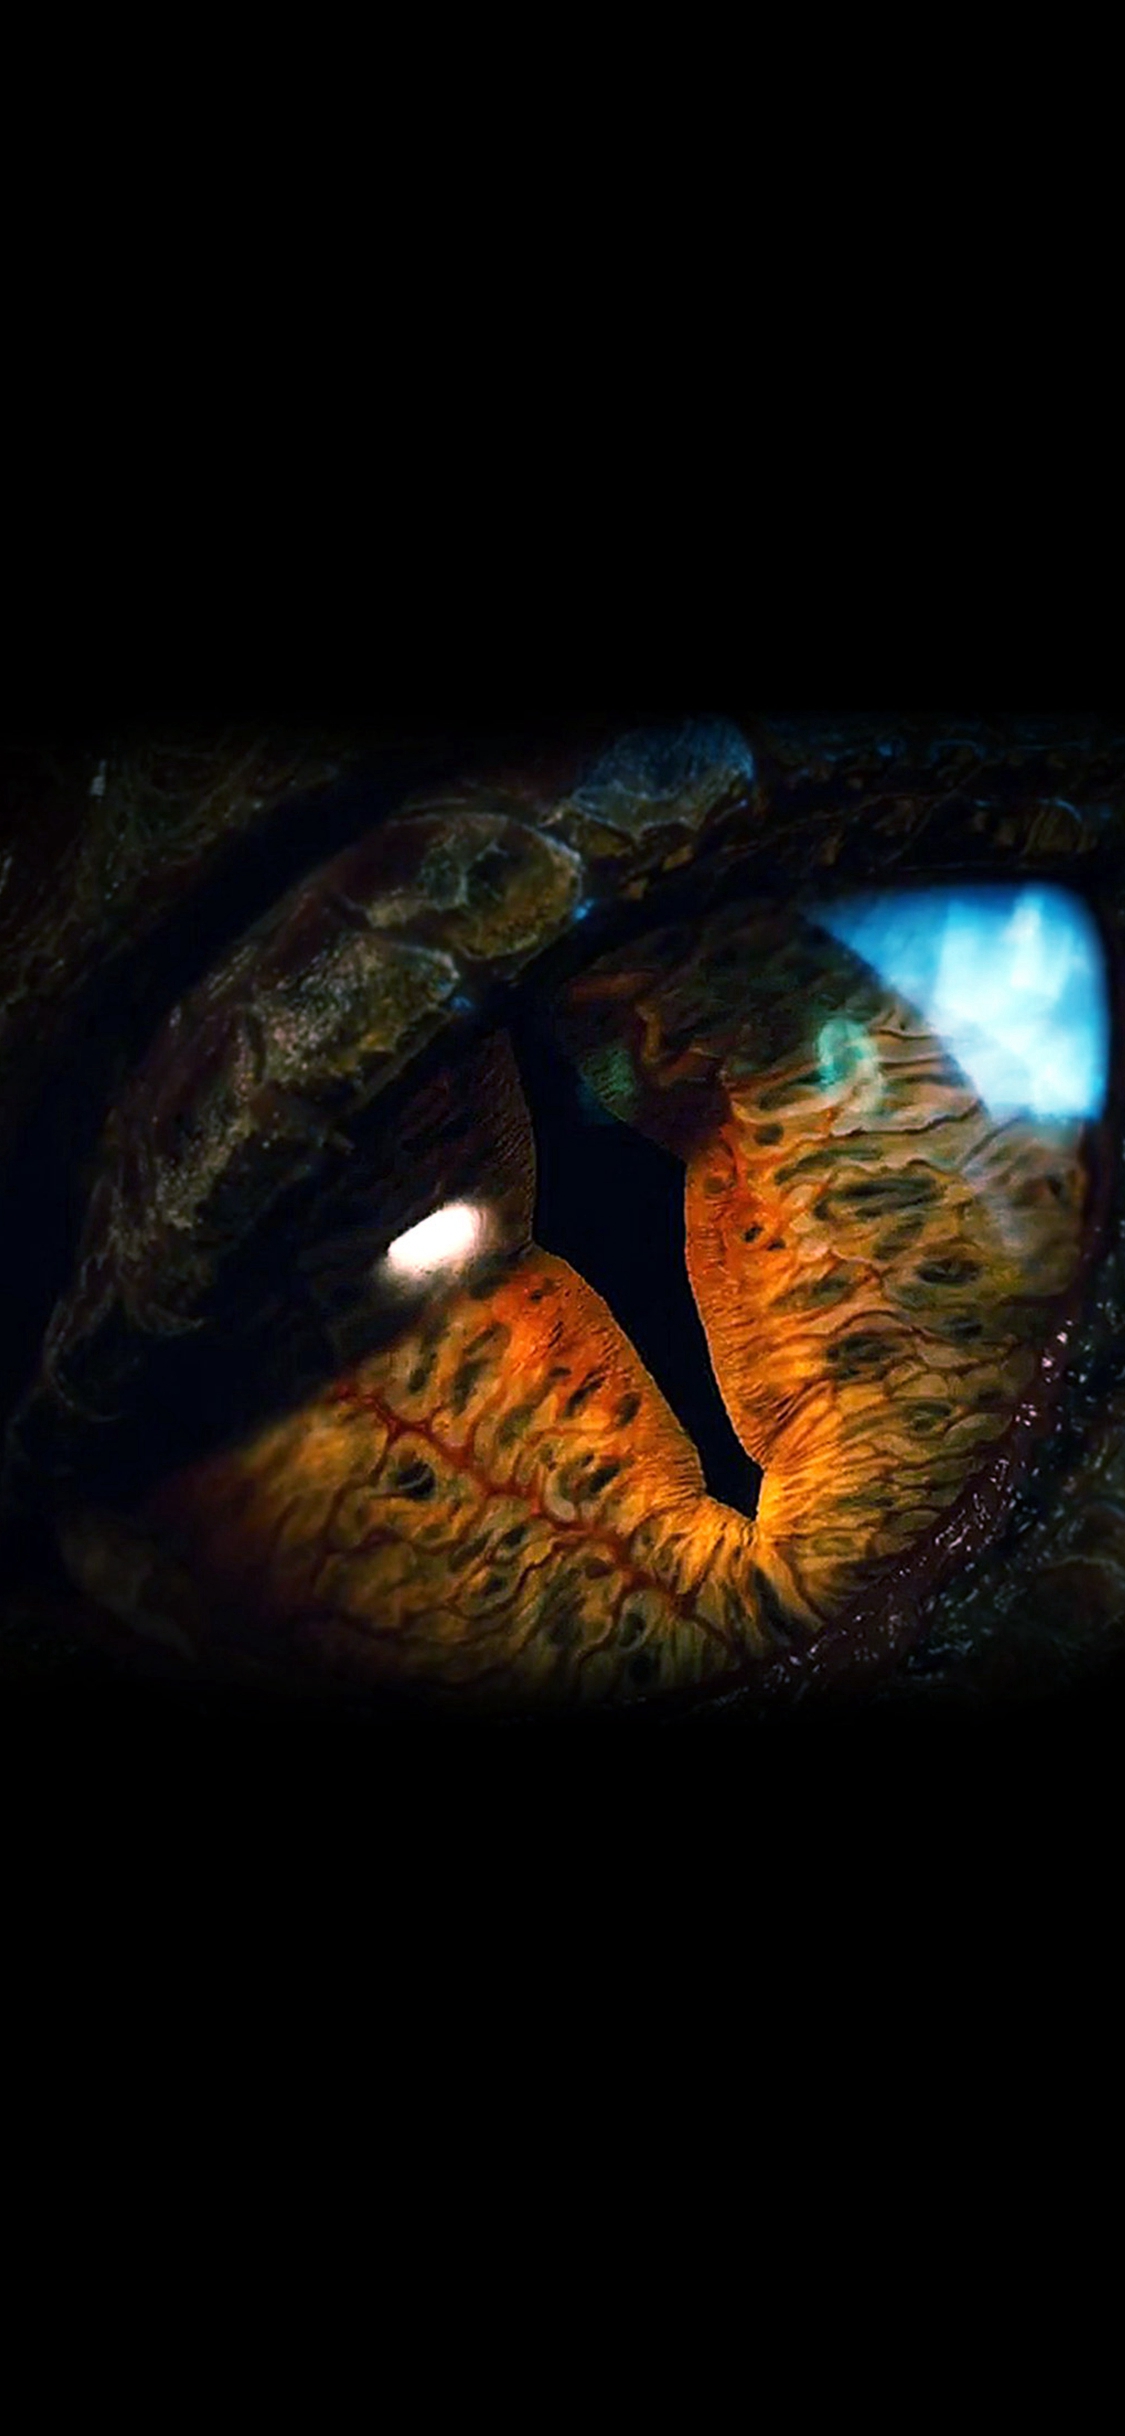 Eye Dragon Film Hobbit The Battle Five Armies Art Dark iPhone wallpaper 